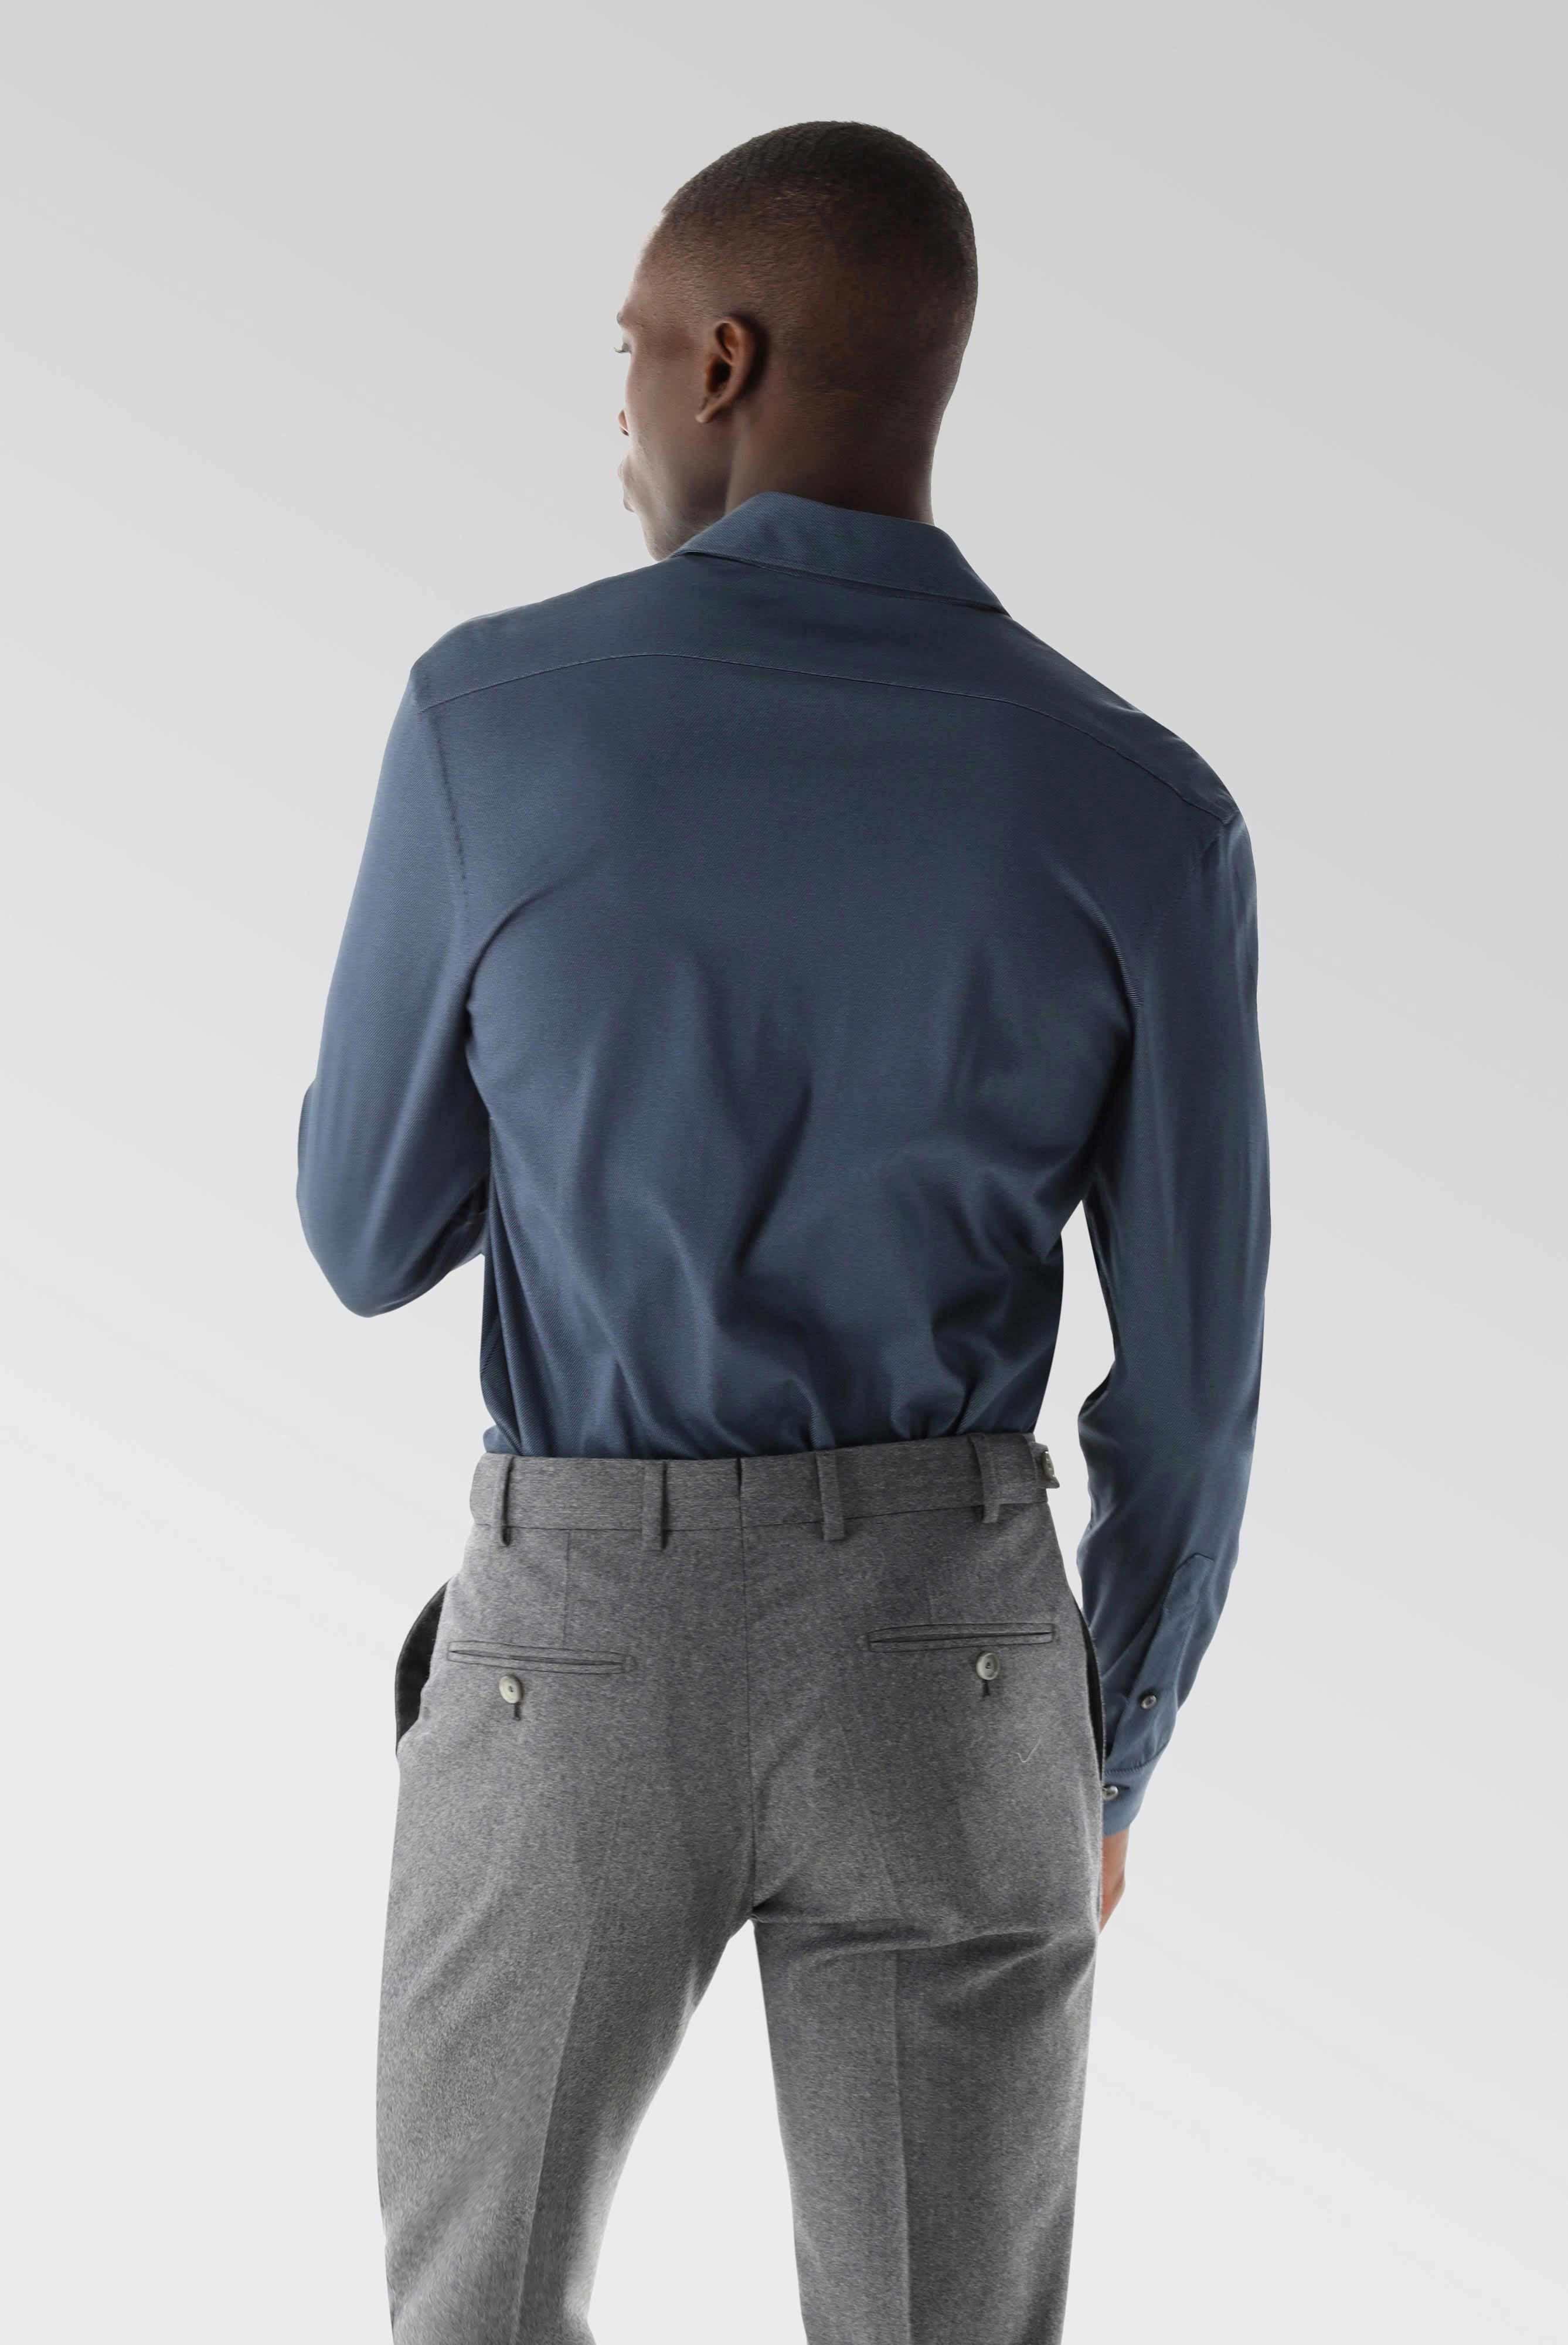 Casual Hemden+Jersey Hemd mit Twill Druck Tailor Fit+20.1683.UC.187749.782.M